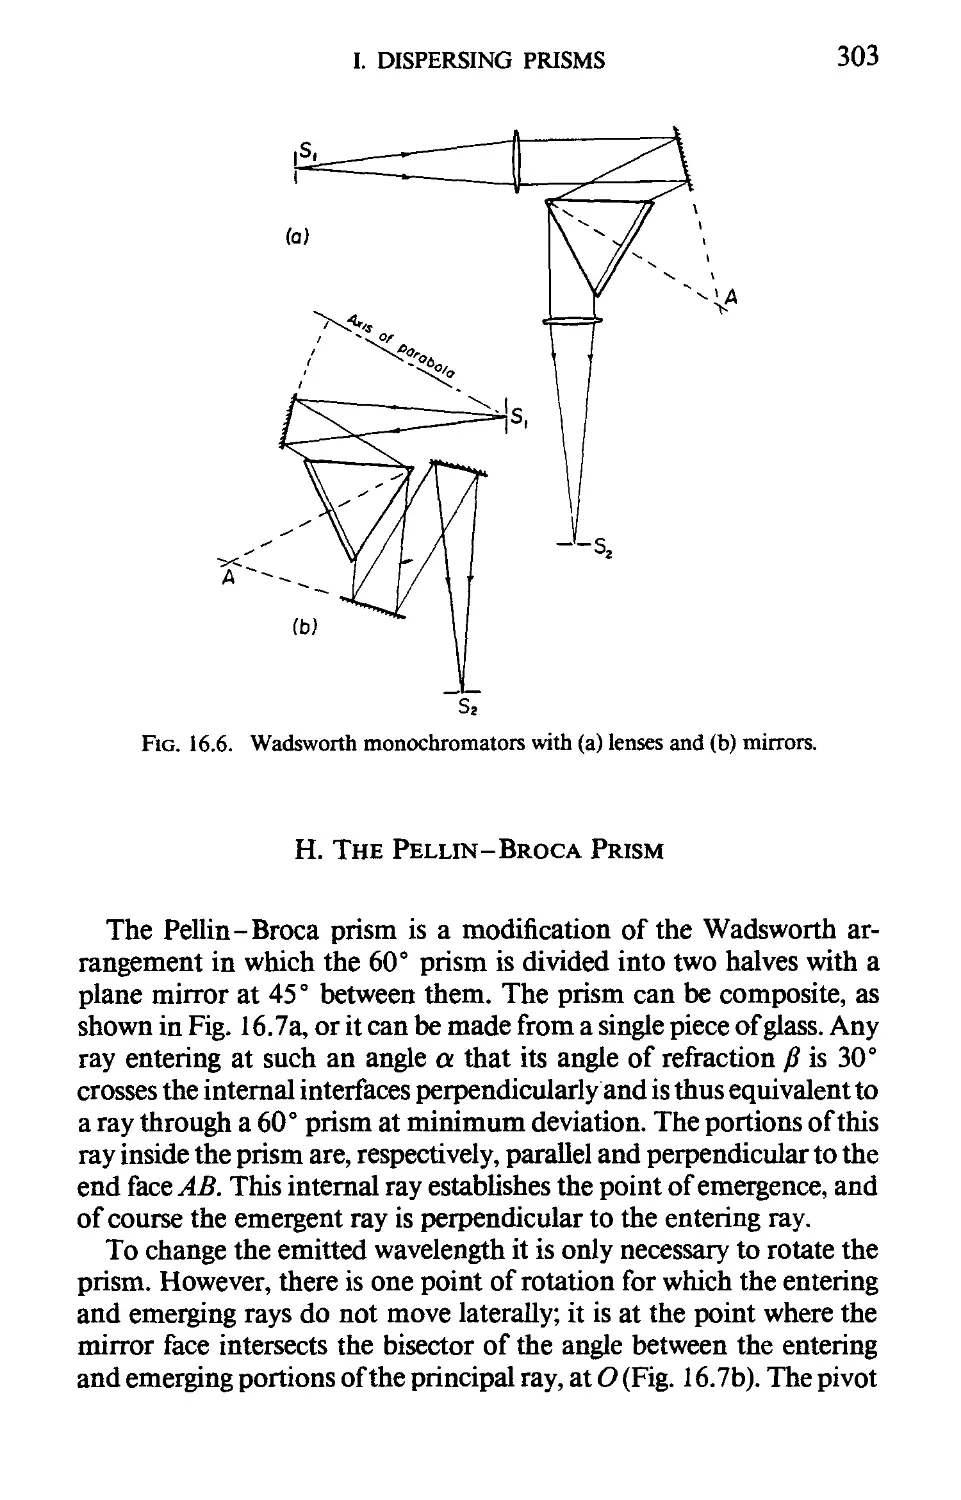 H. The Pellin-Broca Prism